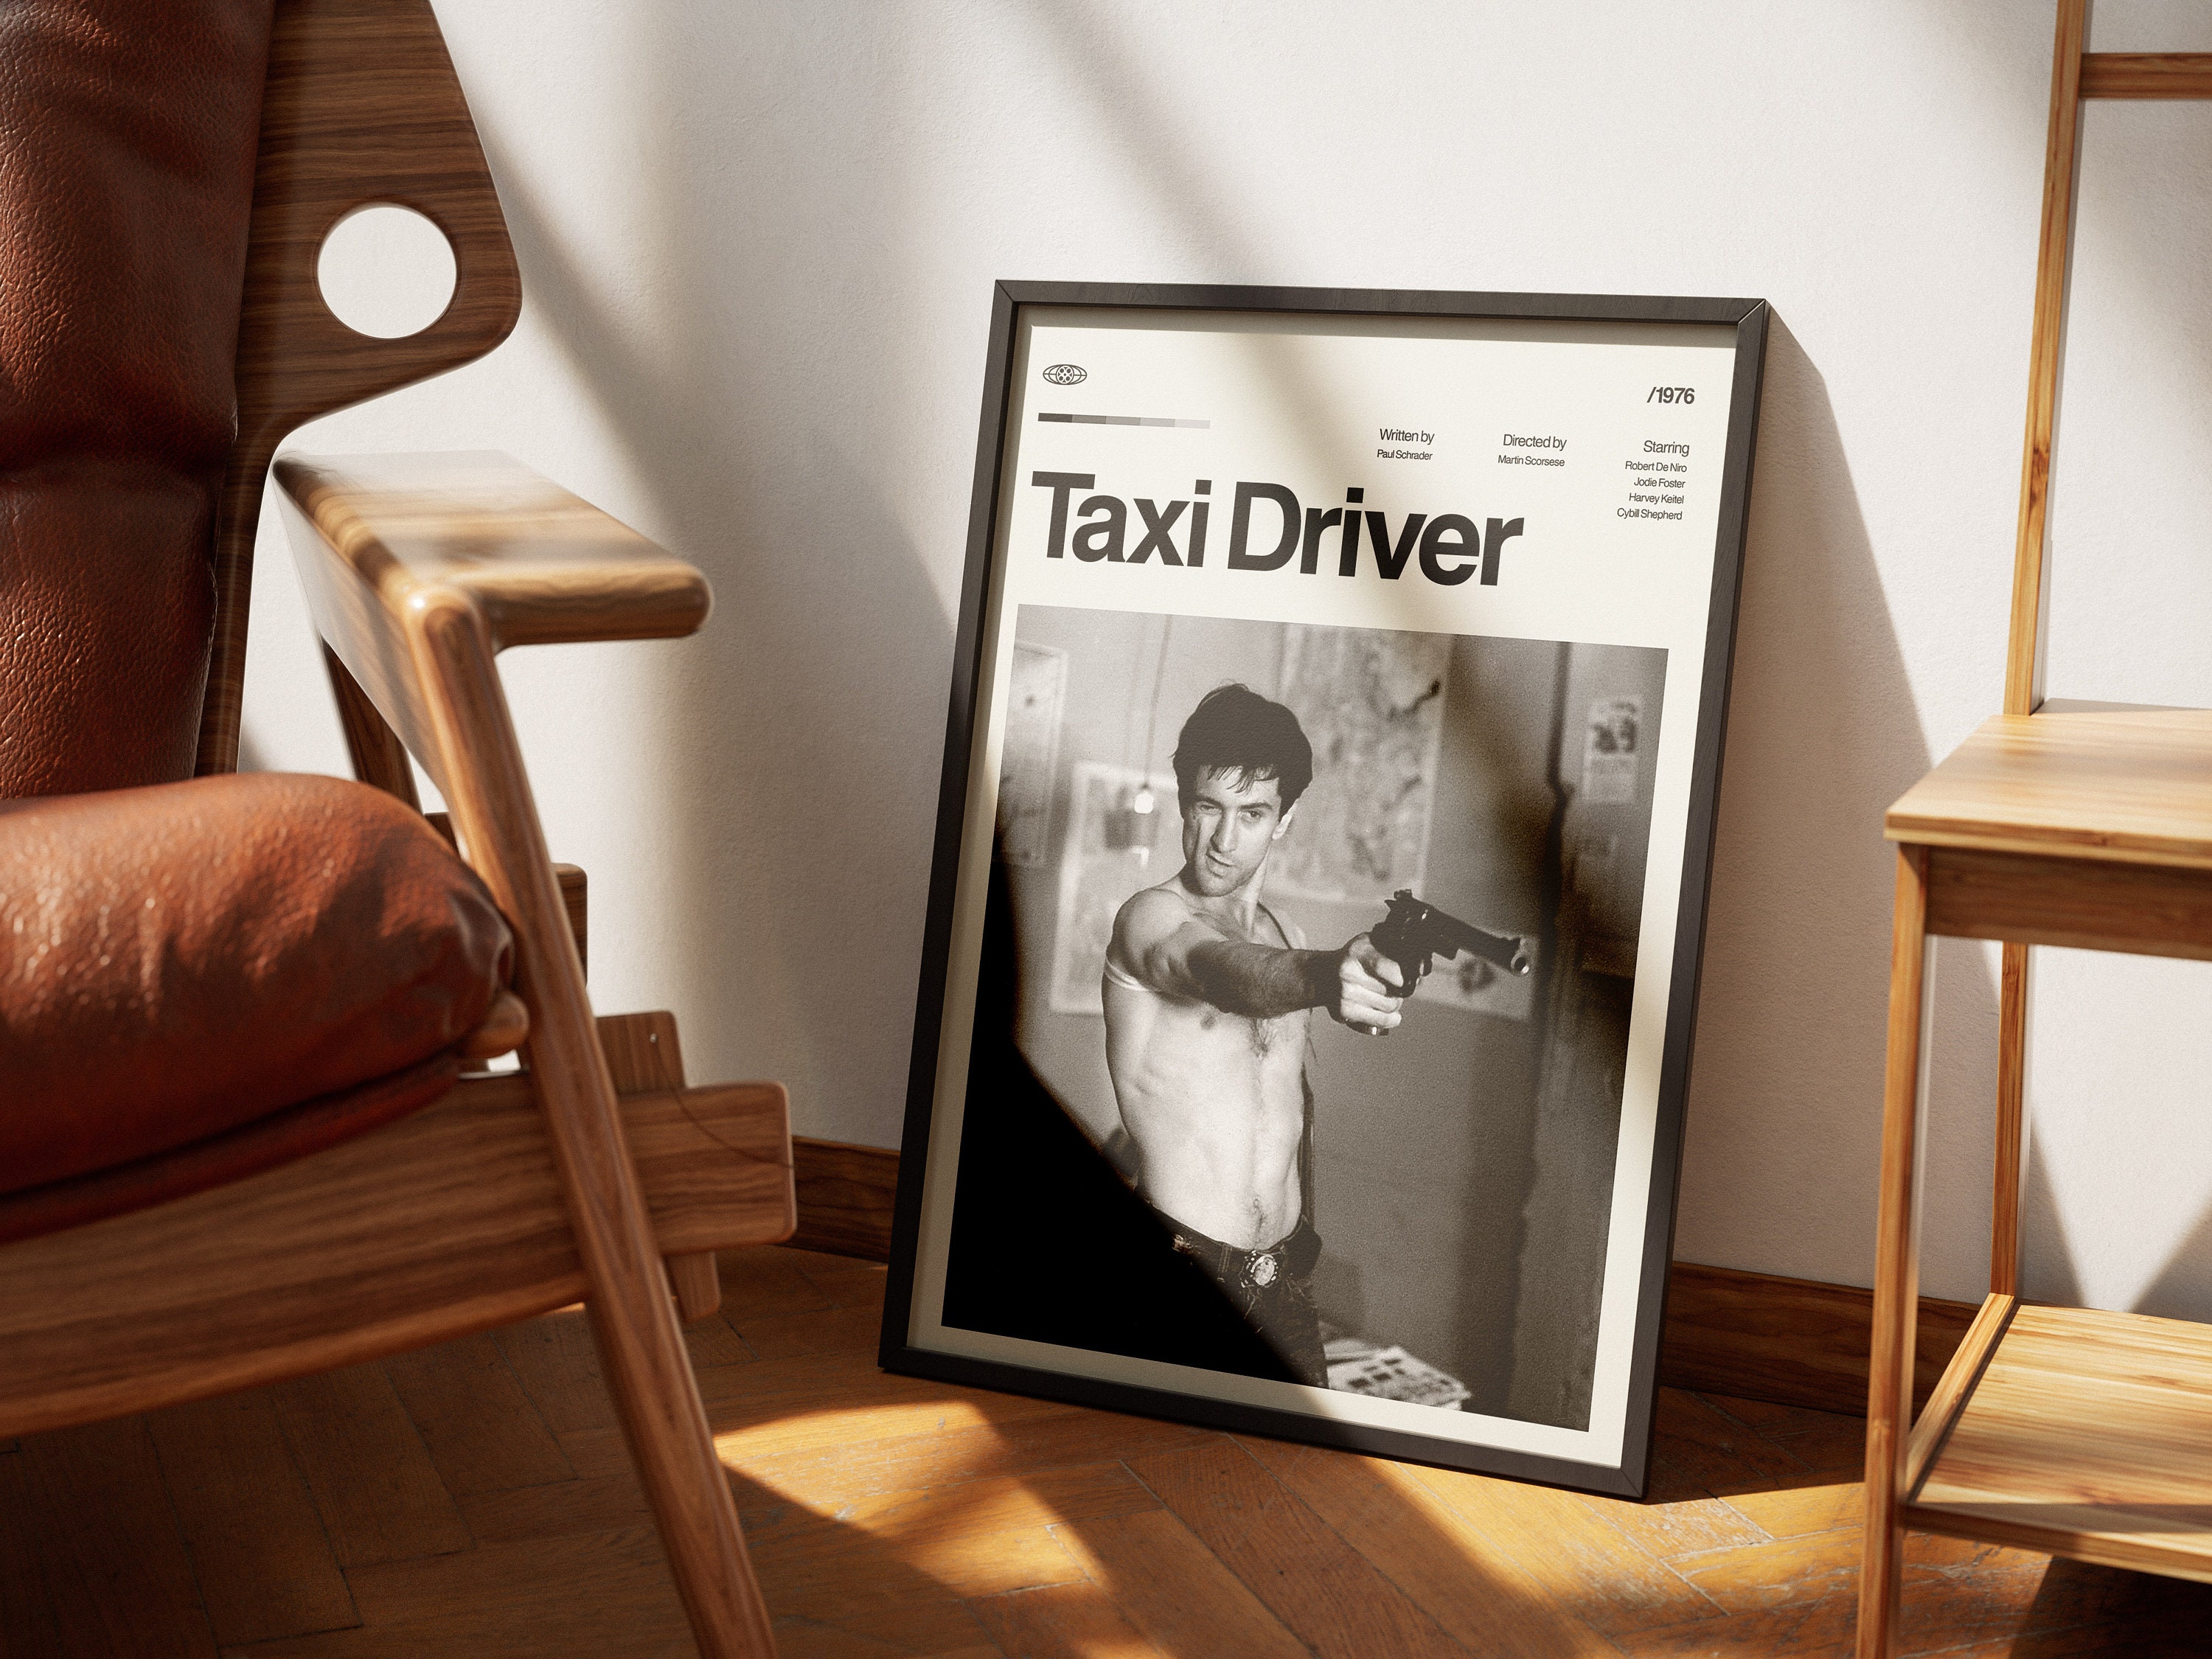 Taxi Driver Movie Poster, Taxi Driver Wall Decor, Taxi Driver Poster Print,  Vintage Retro Art Print 